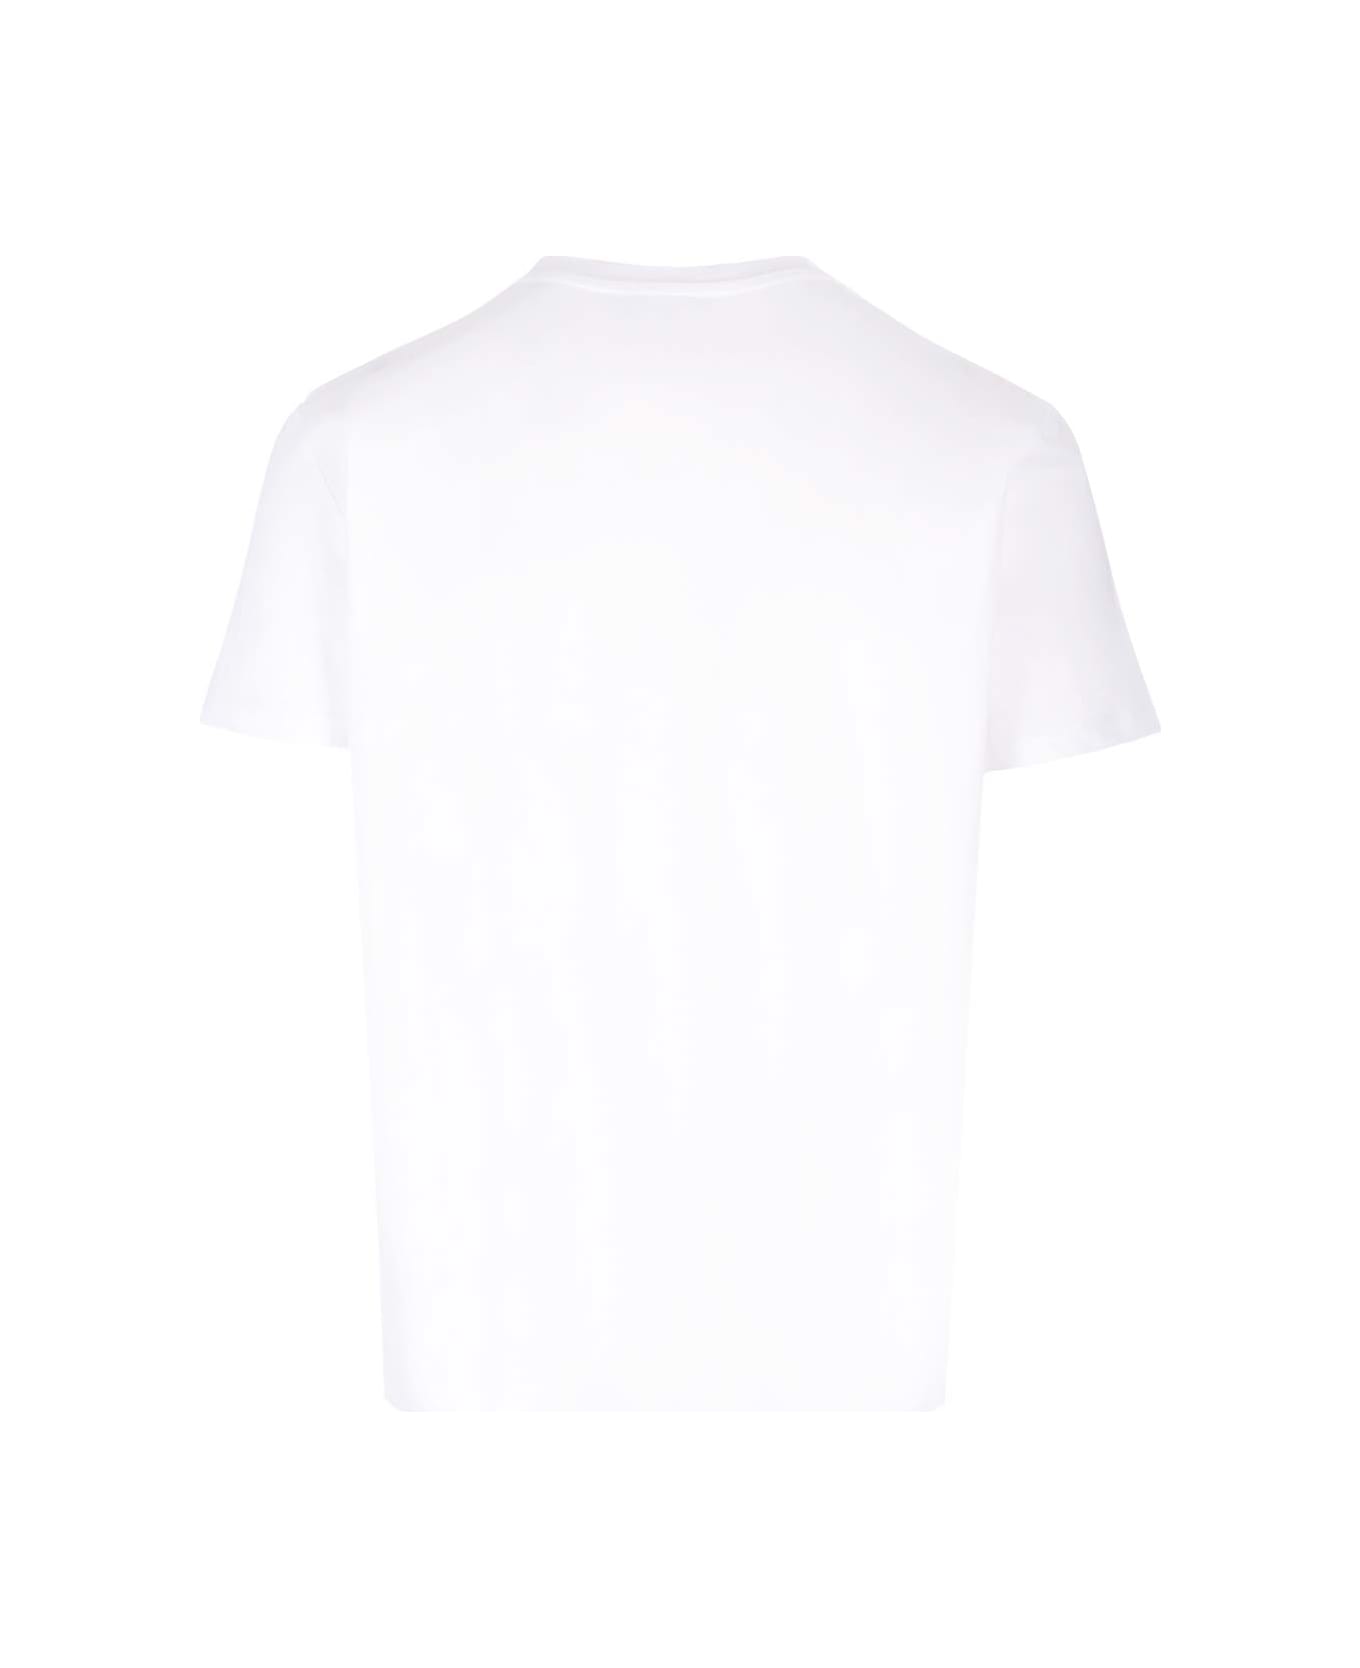 A.P.C. 'vpc' T-shirt Tシャツ